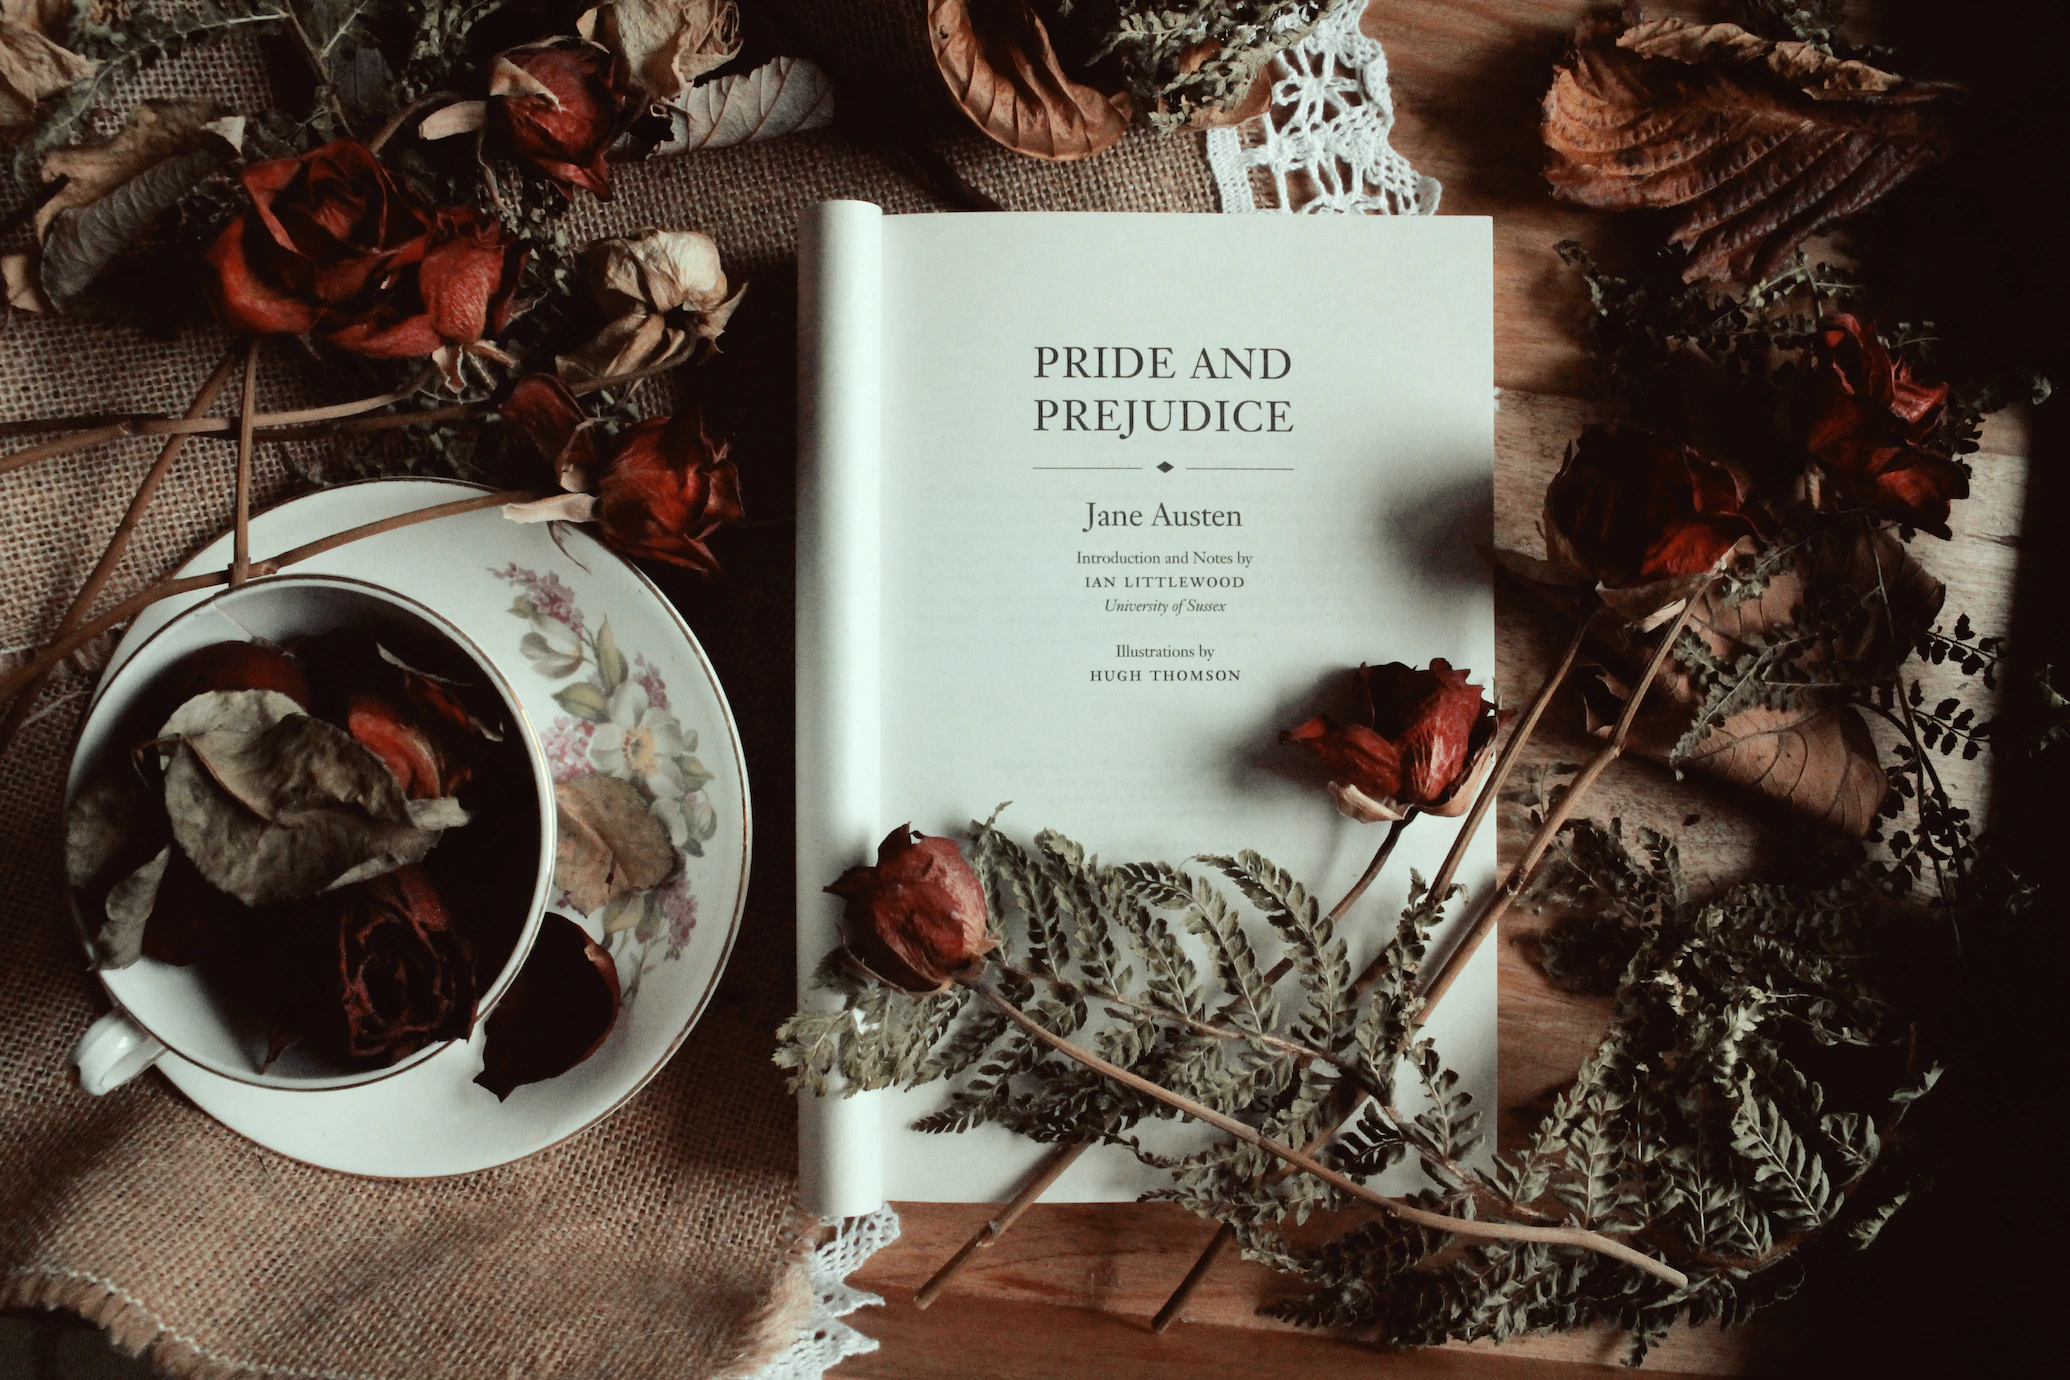 Pride and prejudice Jane Austen